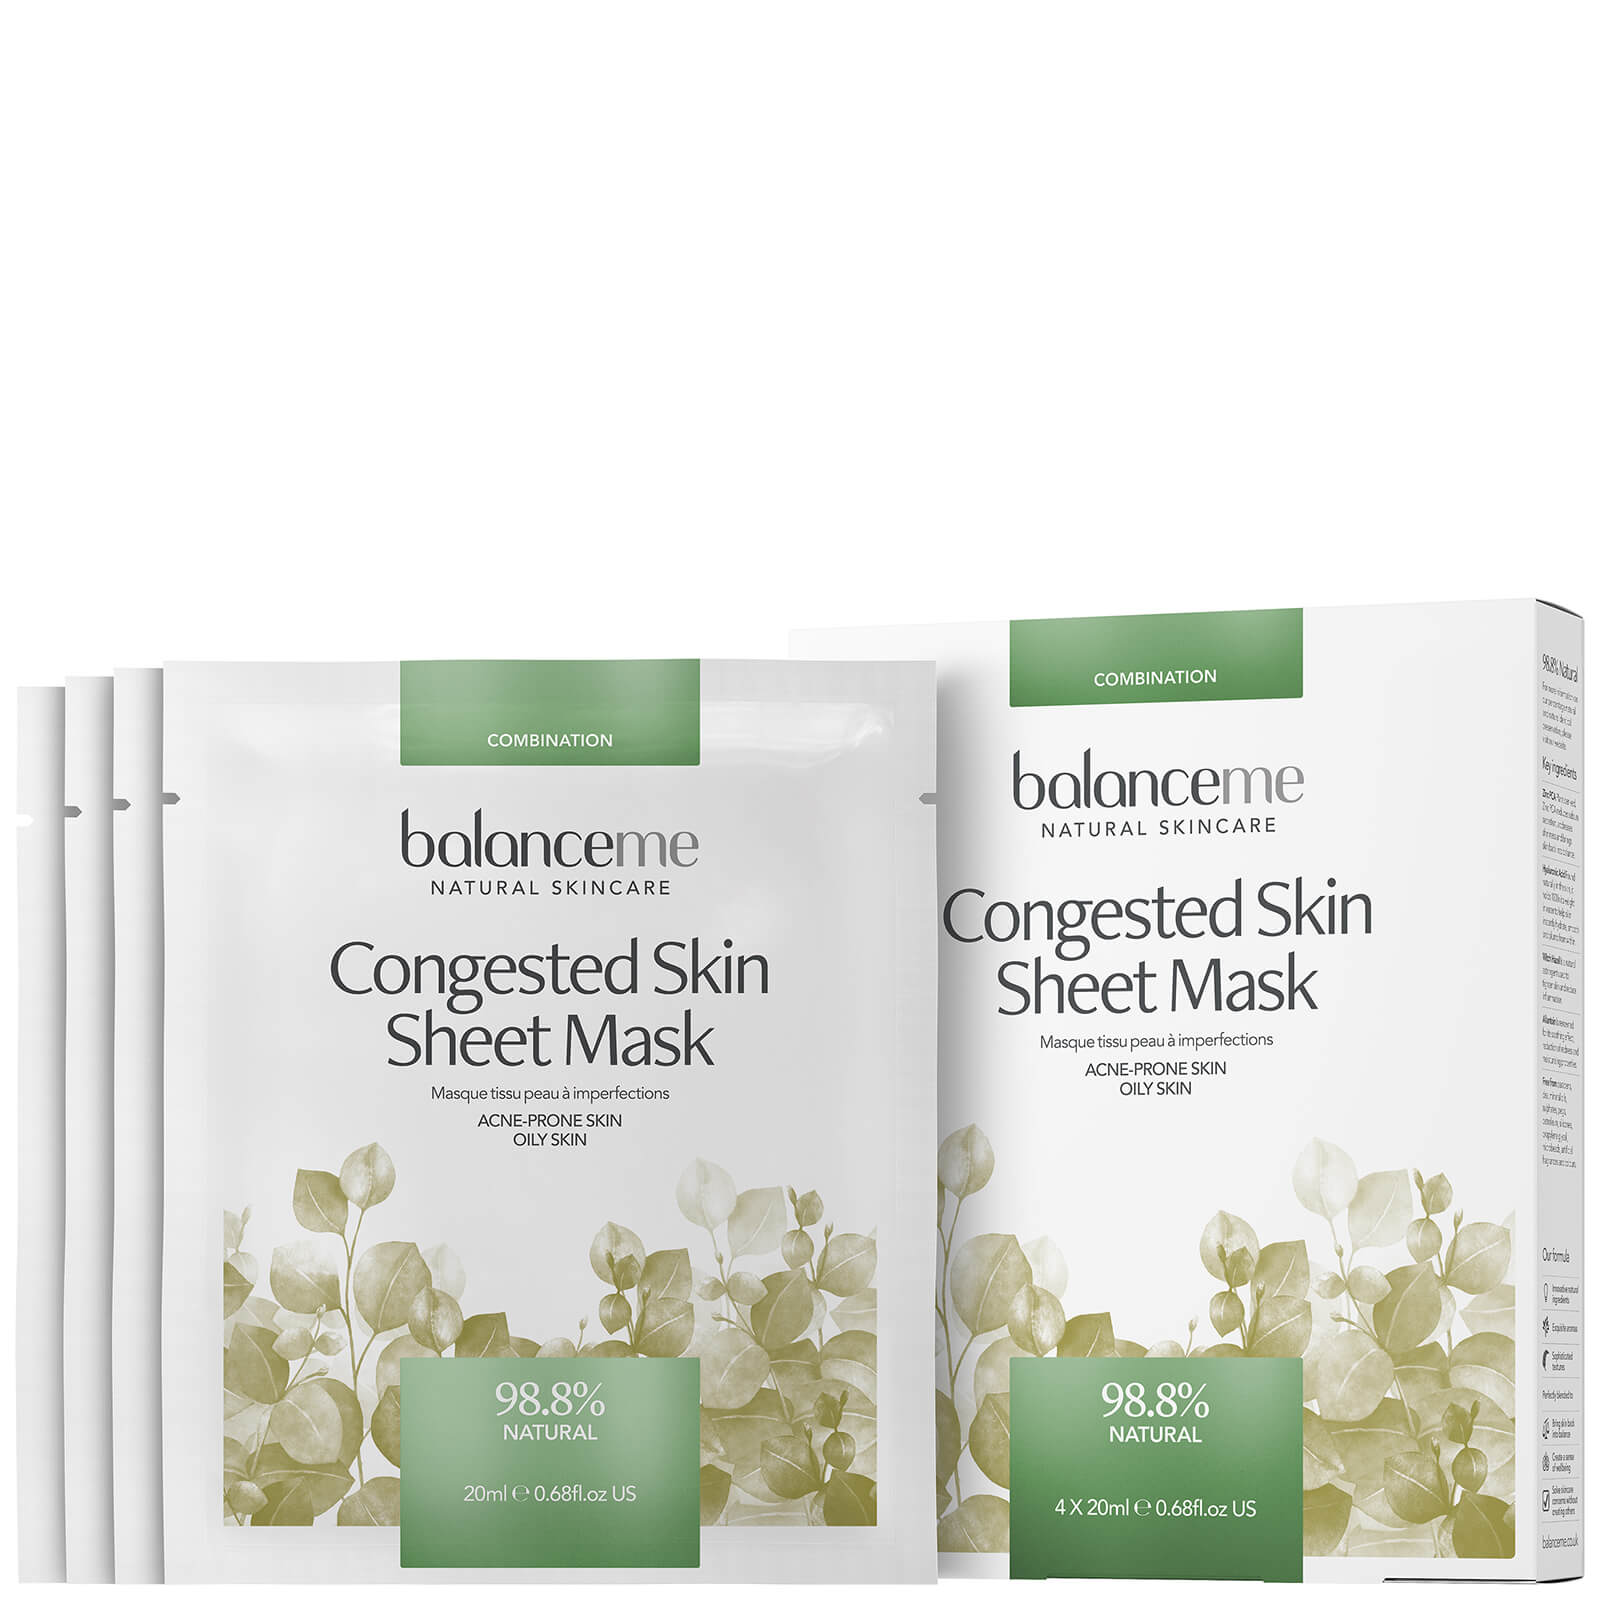 Balance Me Congested Skin Sheet Mask (4 x 20ml)